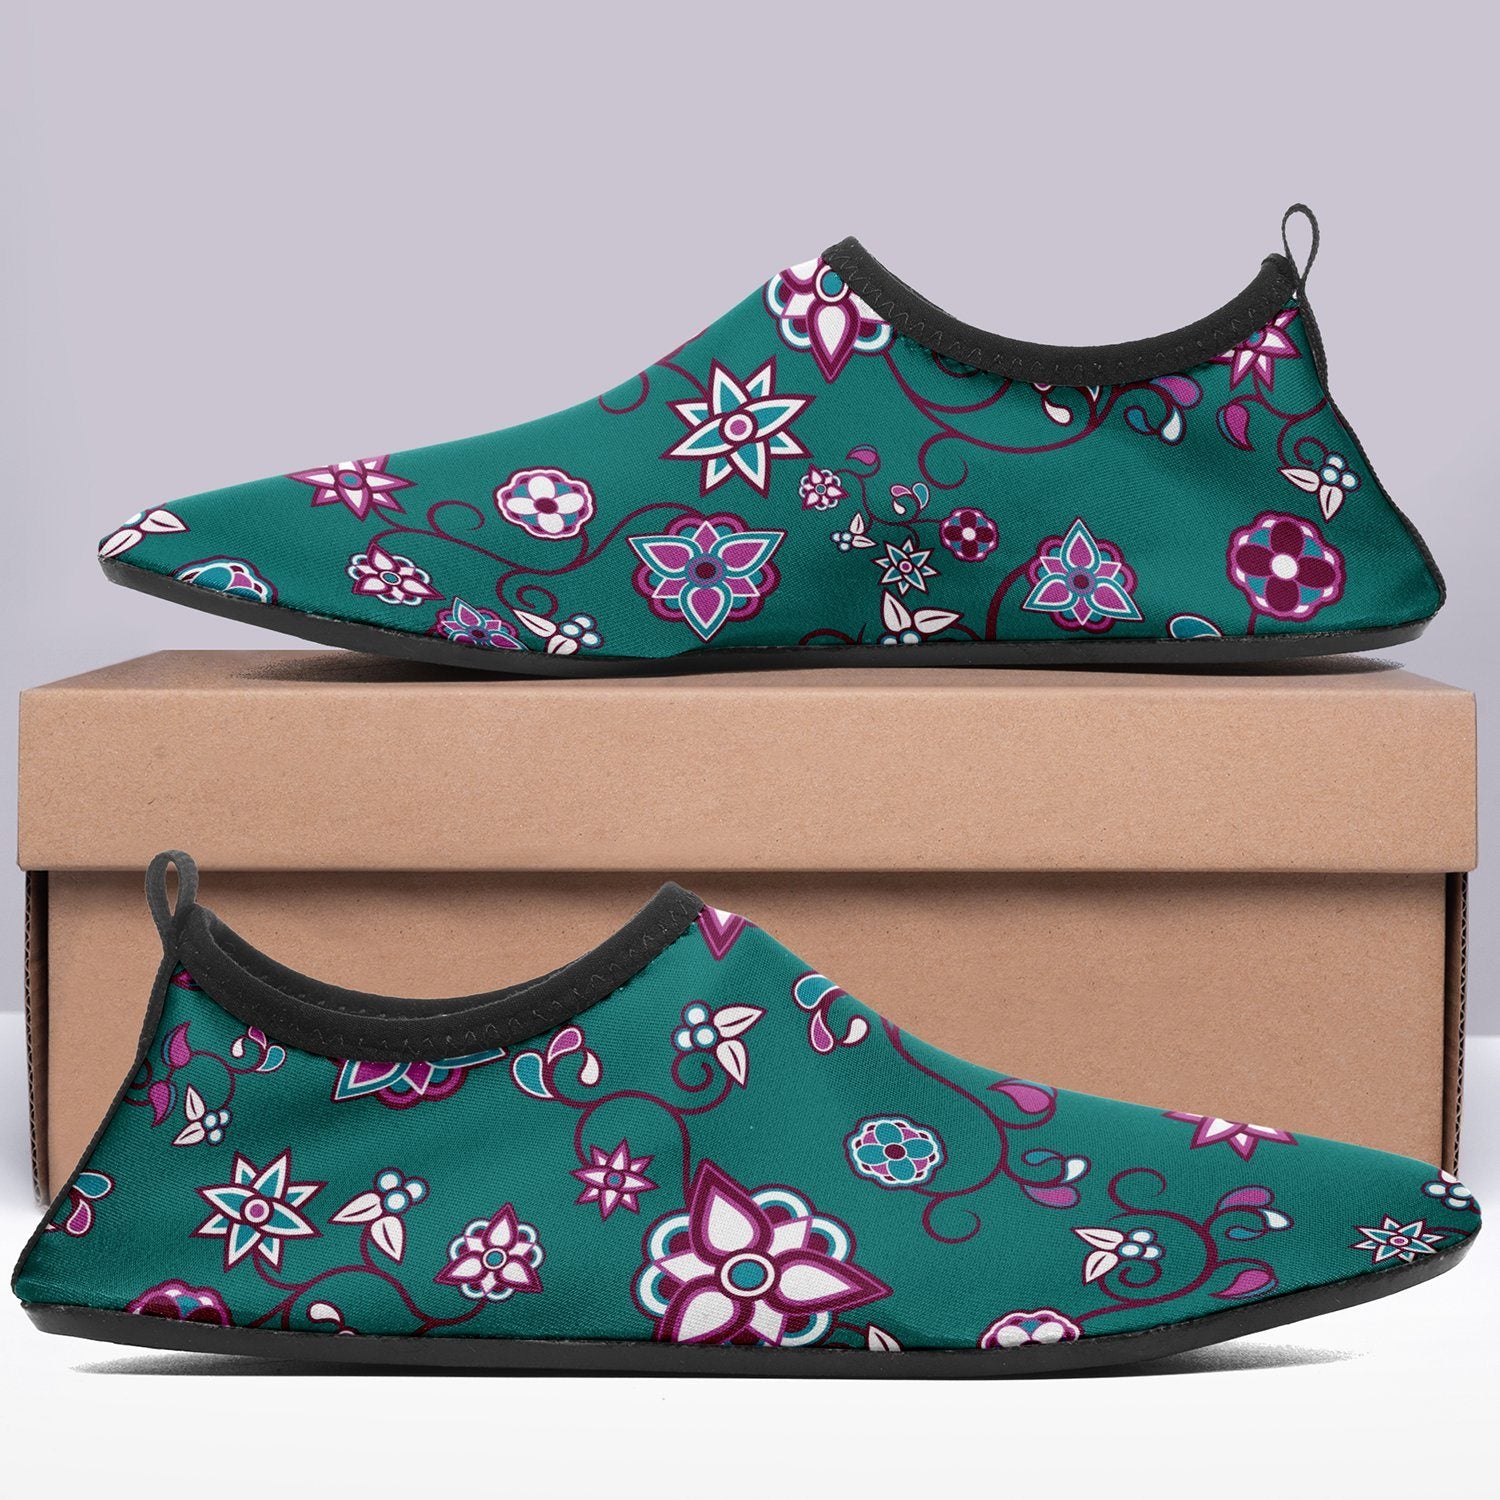 Burgundy Bloom Sockamoccs Slip On Shoes Herman 